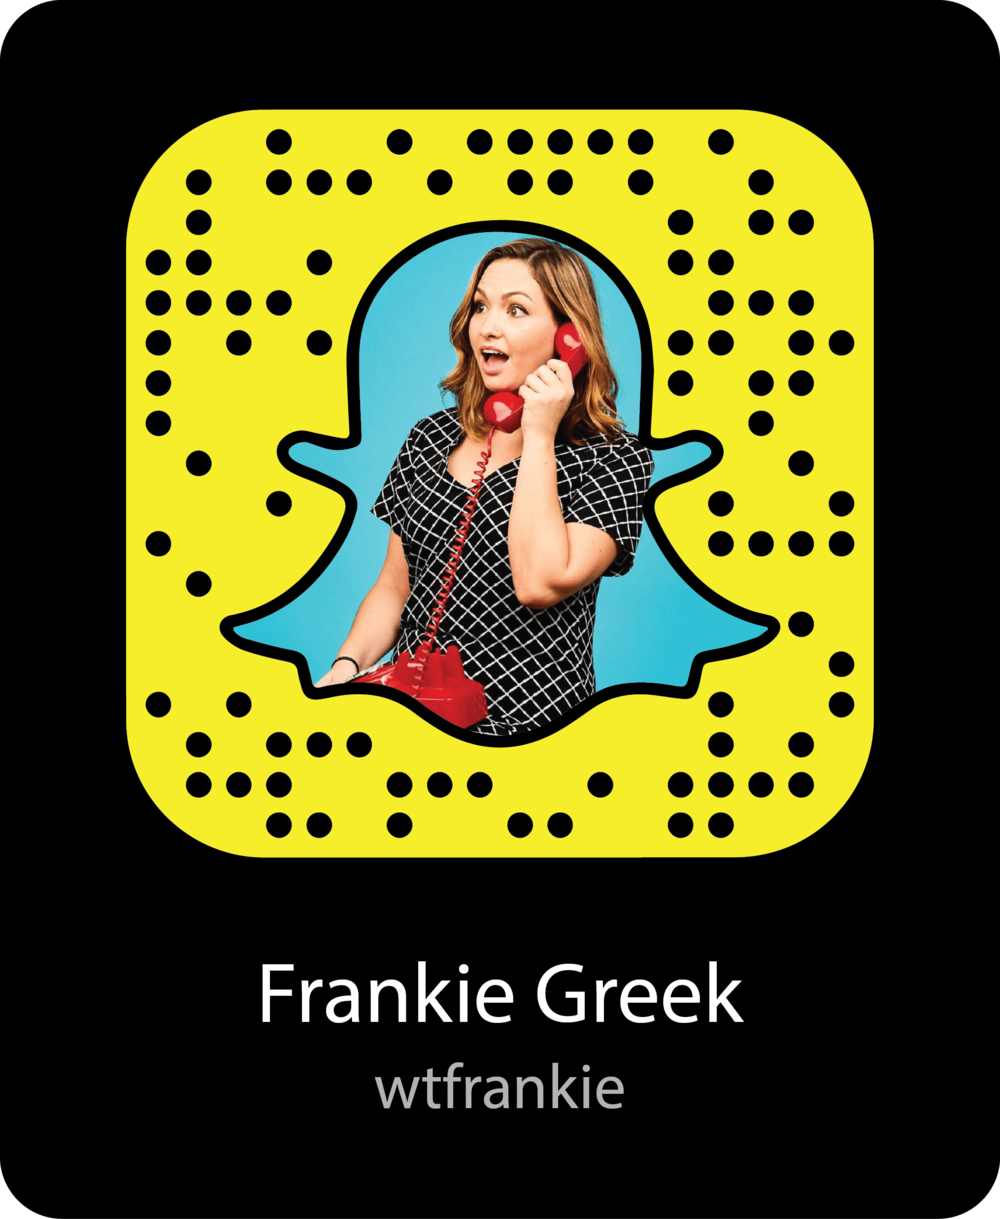 Frankie Greek: (wtfrankie) Category: Storytellers 